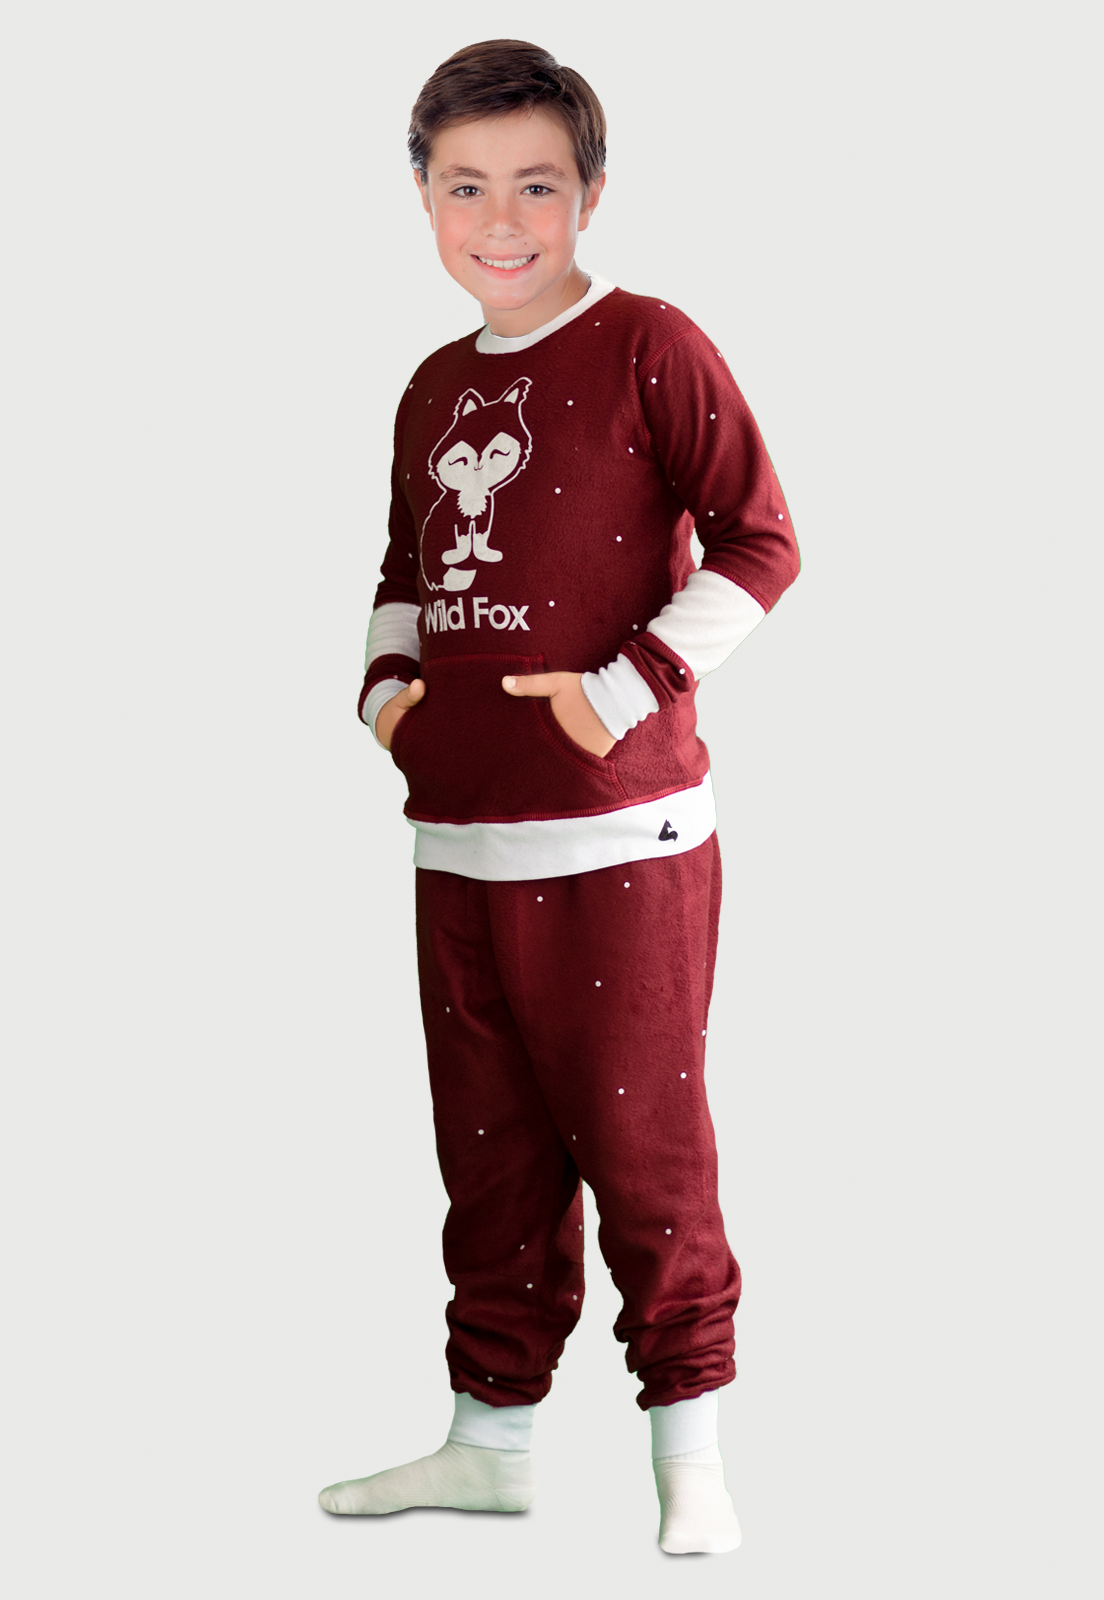 Lindo niño usando una pijama vinotinto estampada con un zorro blanco